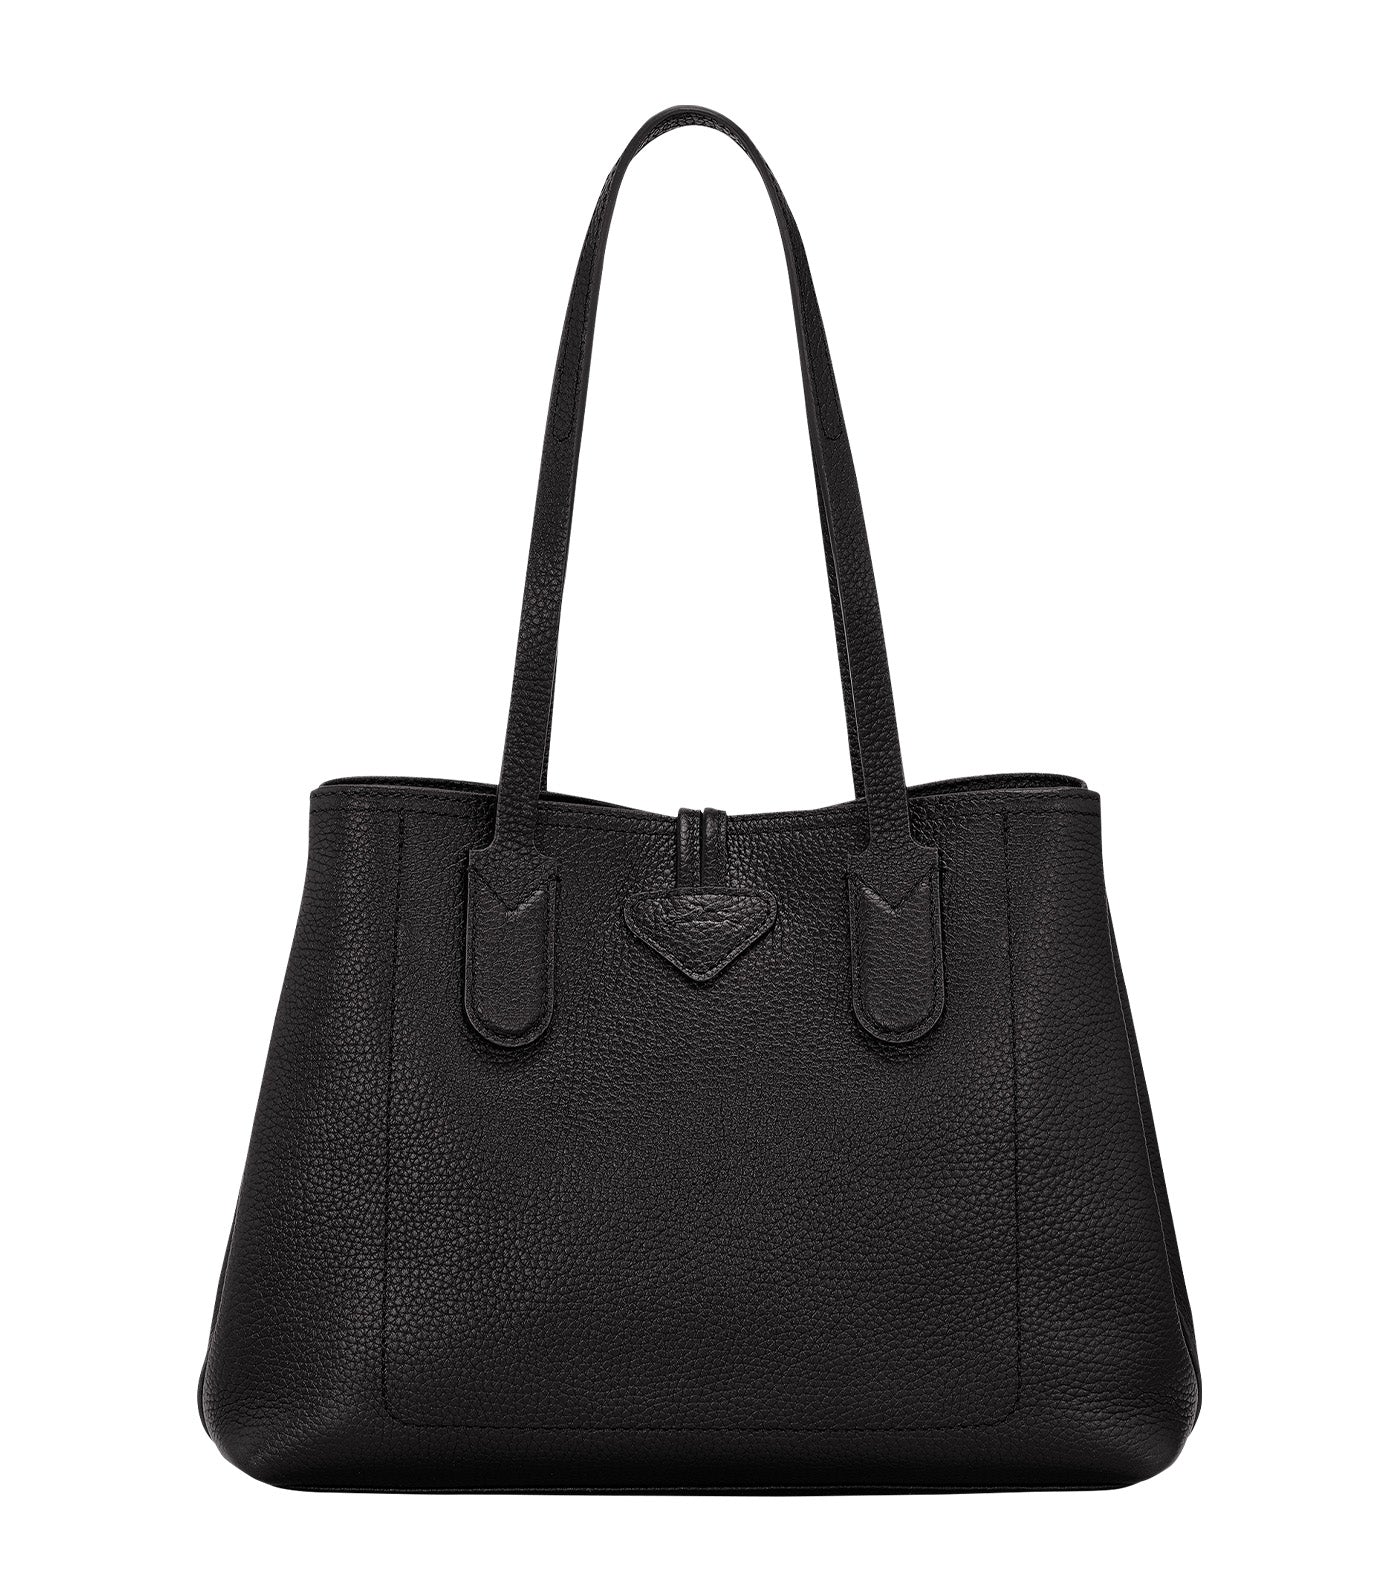 Longchamp Roseau Essential Hobo - Black Hobos, Handbags - WL865606